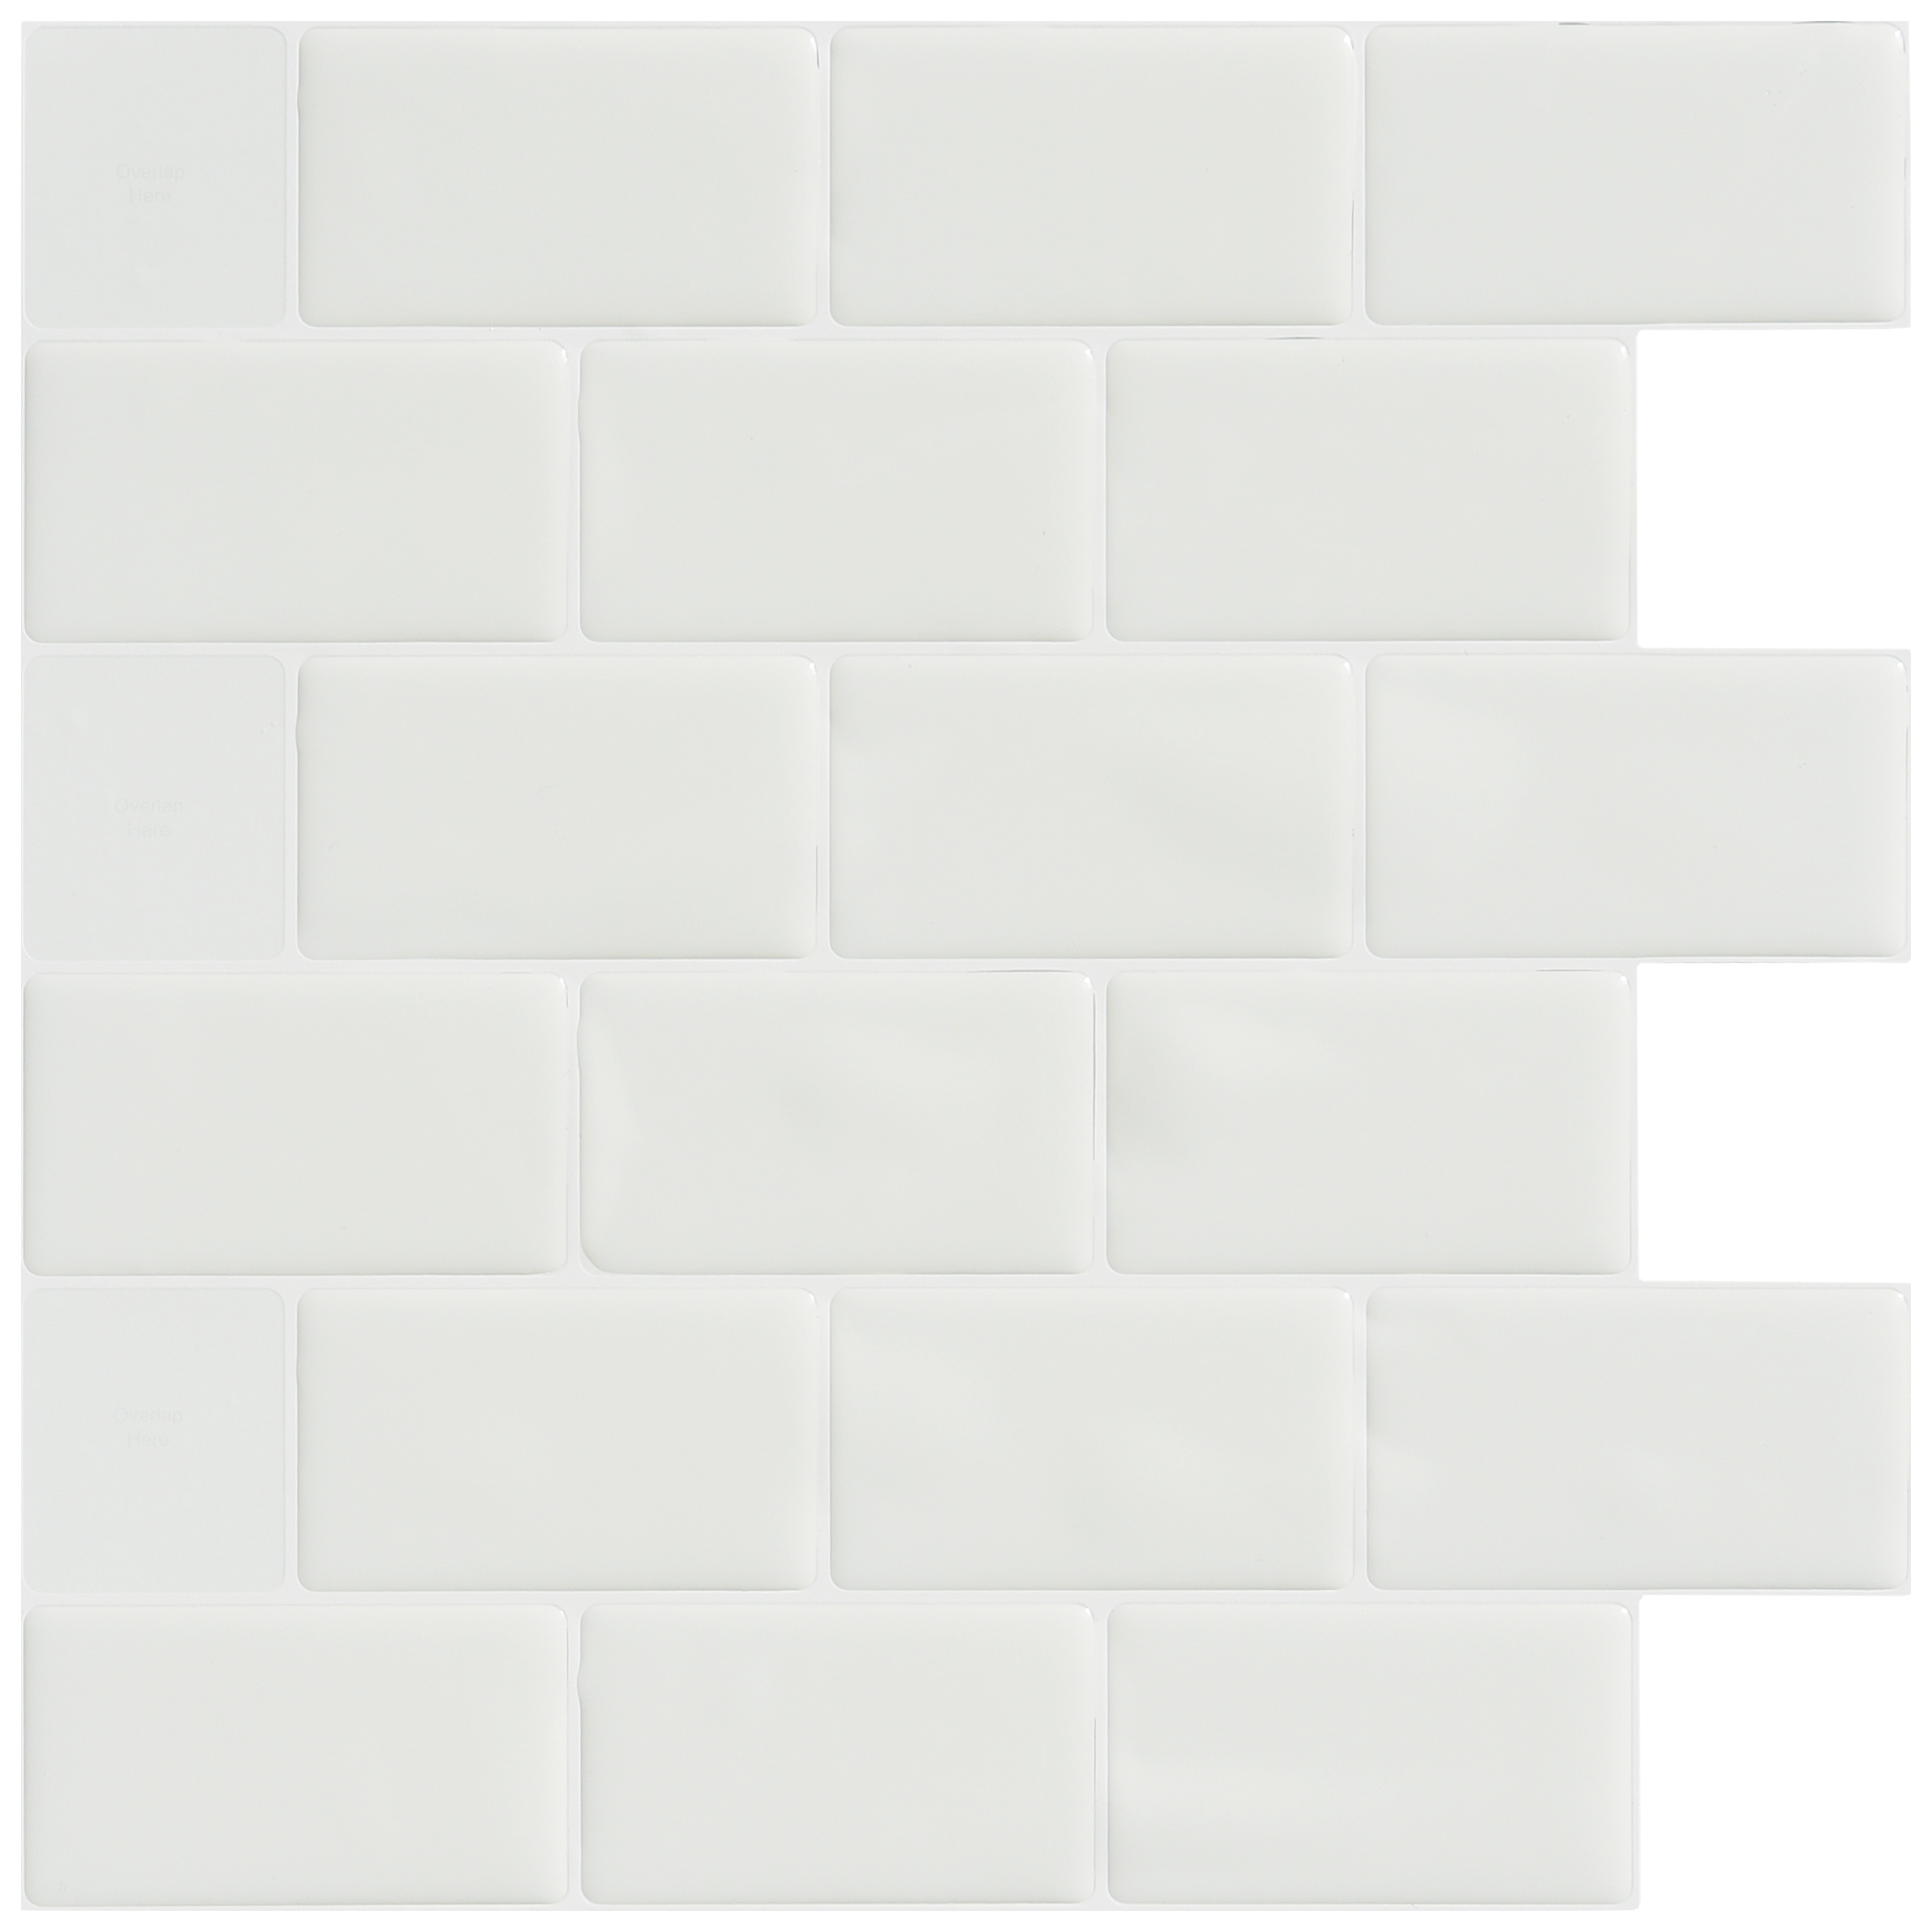 Art3d 10-Tiles Self Adhesive Wall Tile Peel and Stick Backsplash Tile for Kitchen, Marble Design 12 inchx12 inch